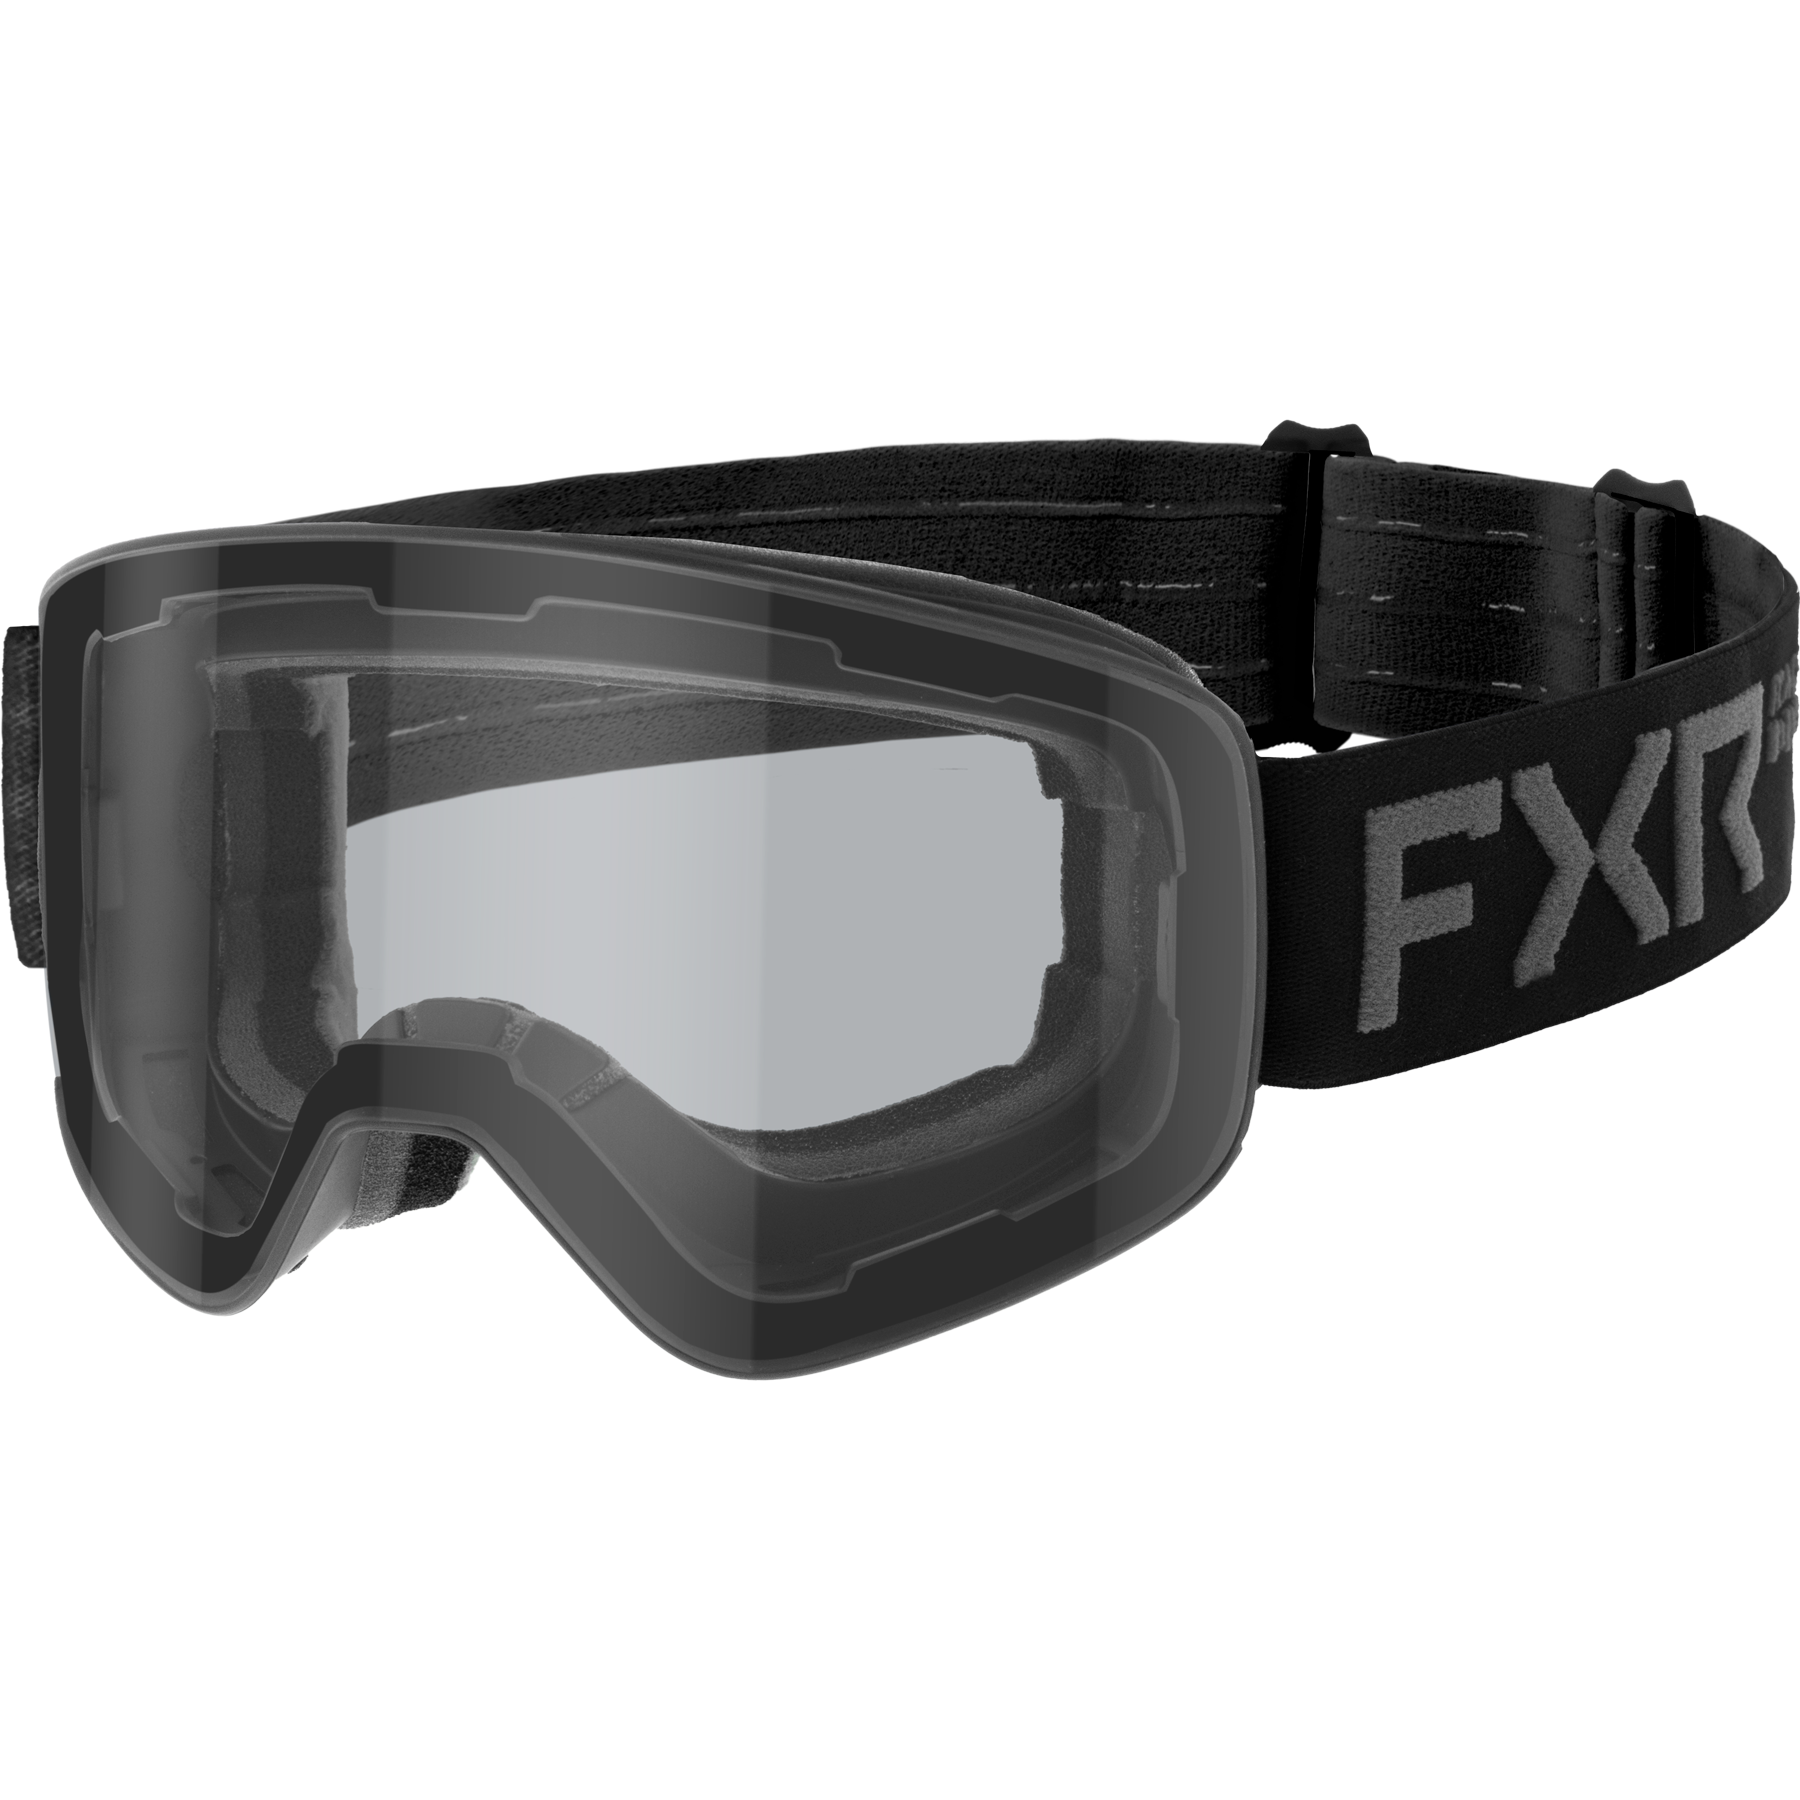 fxr racing goggles lens adult ridge clear